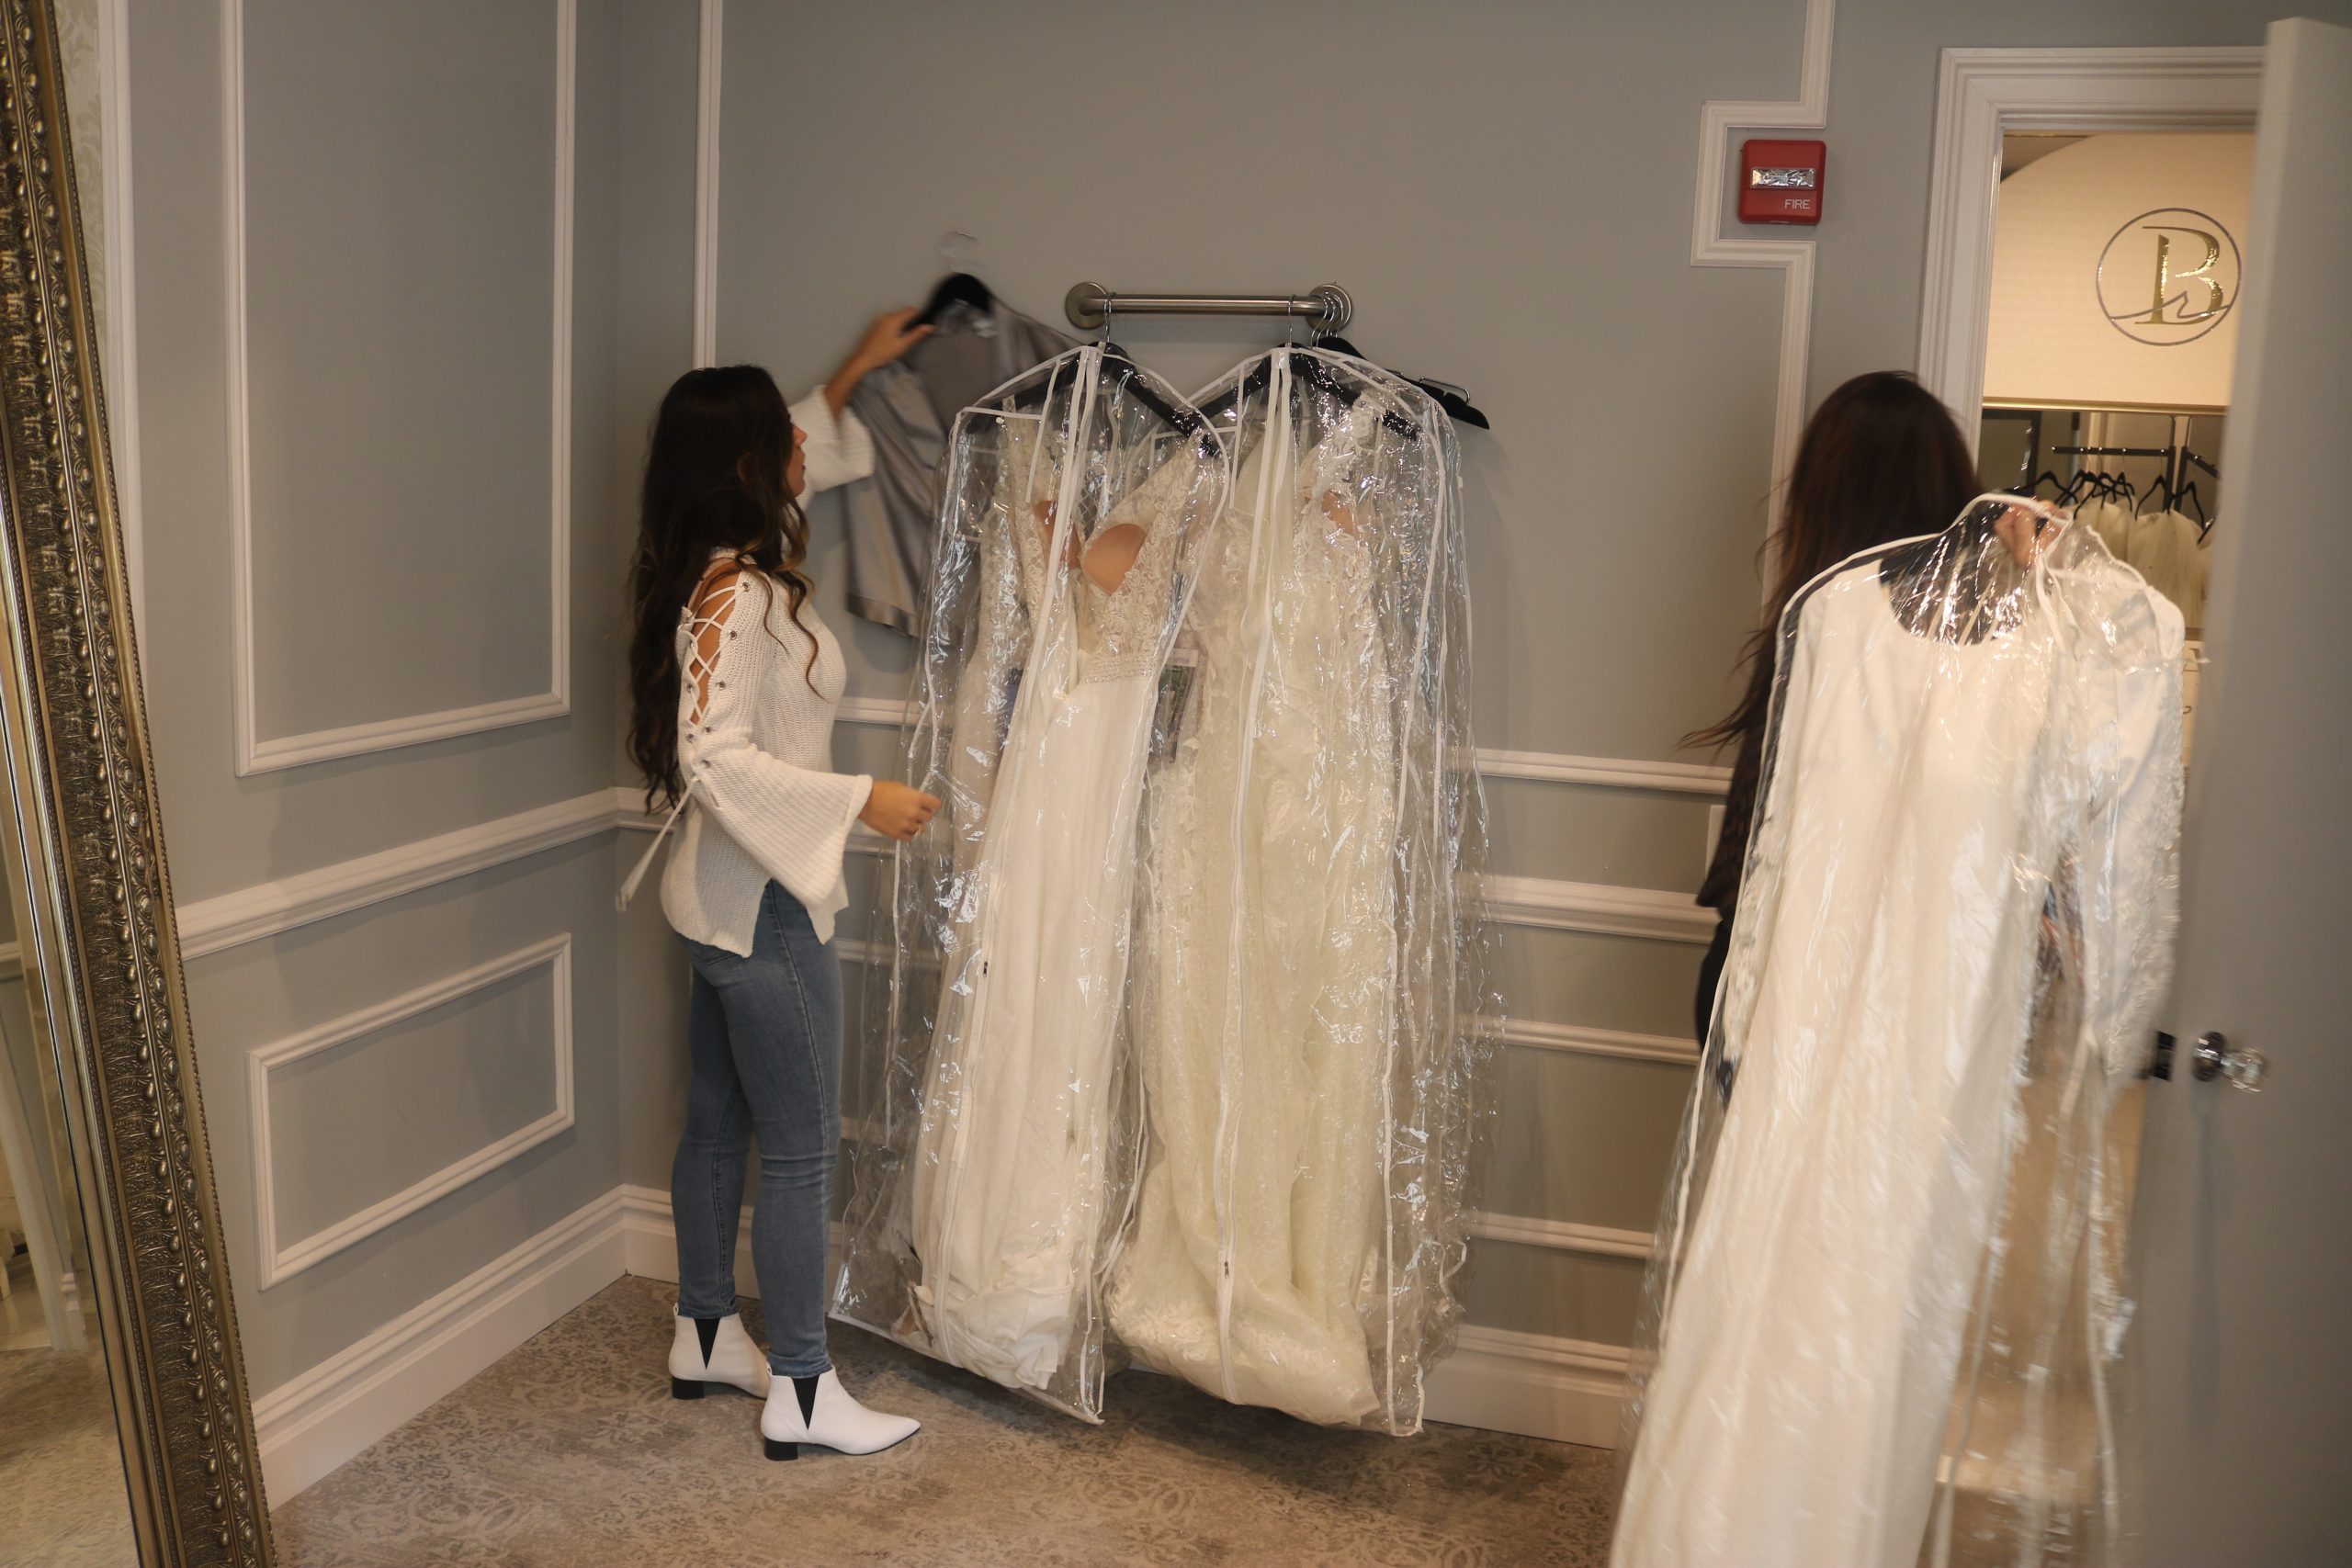 Influencer bride shopping for her wedding dress